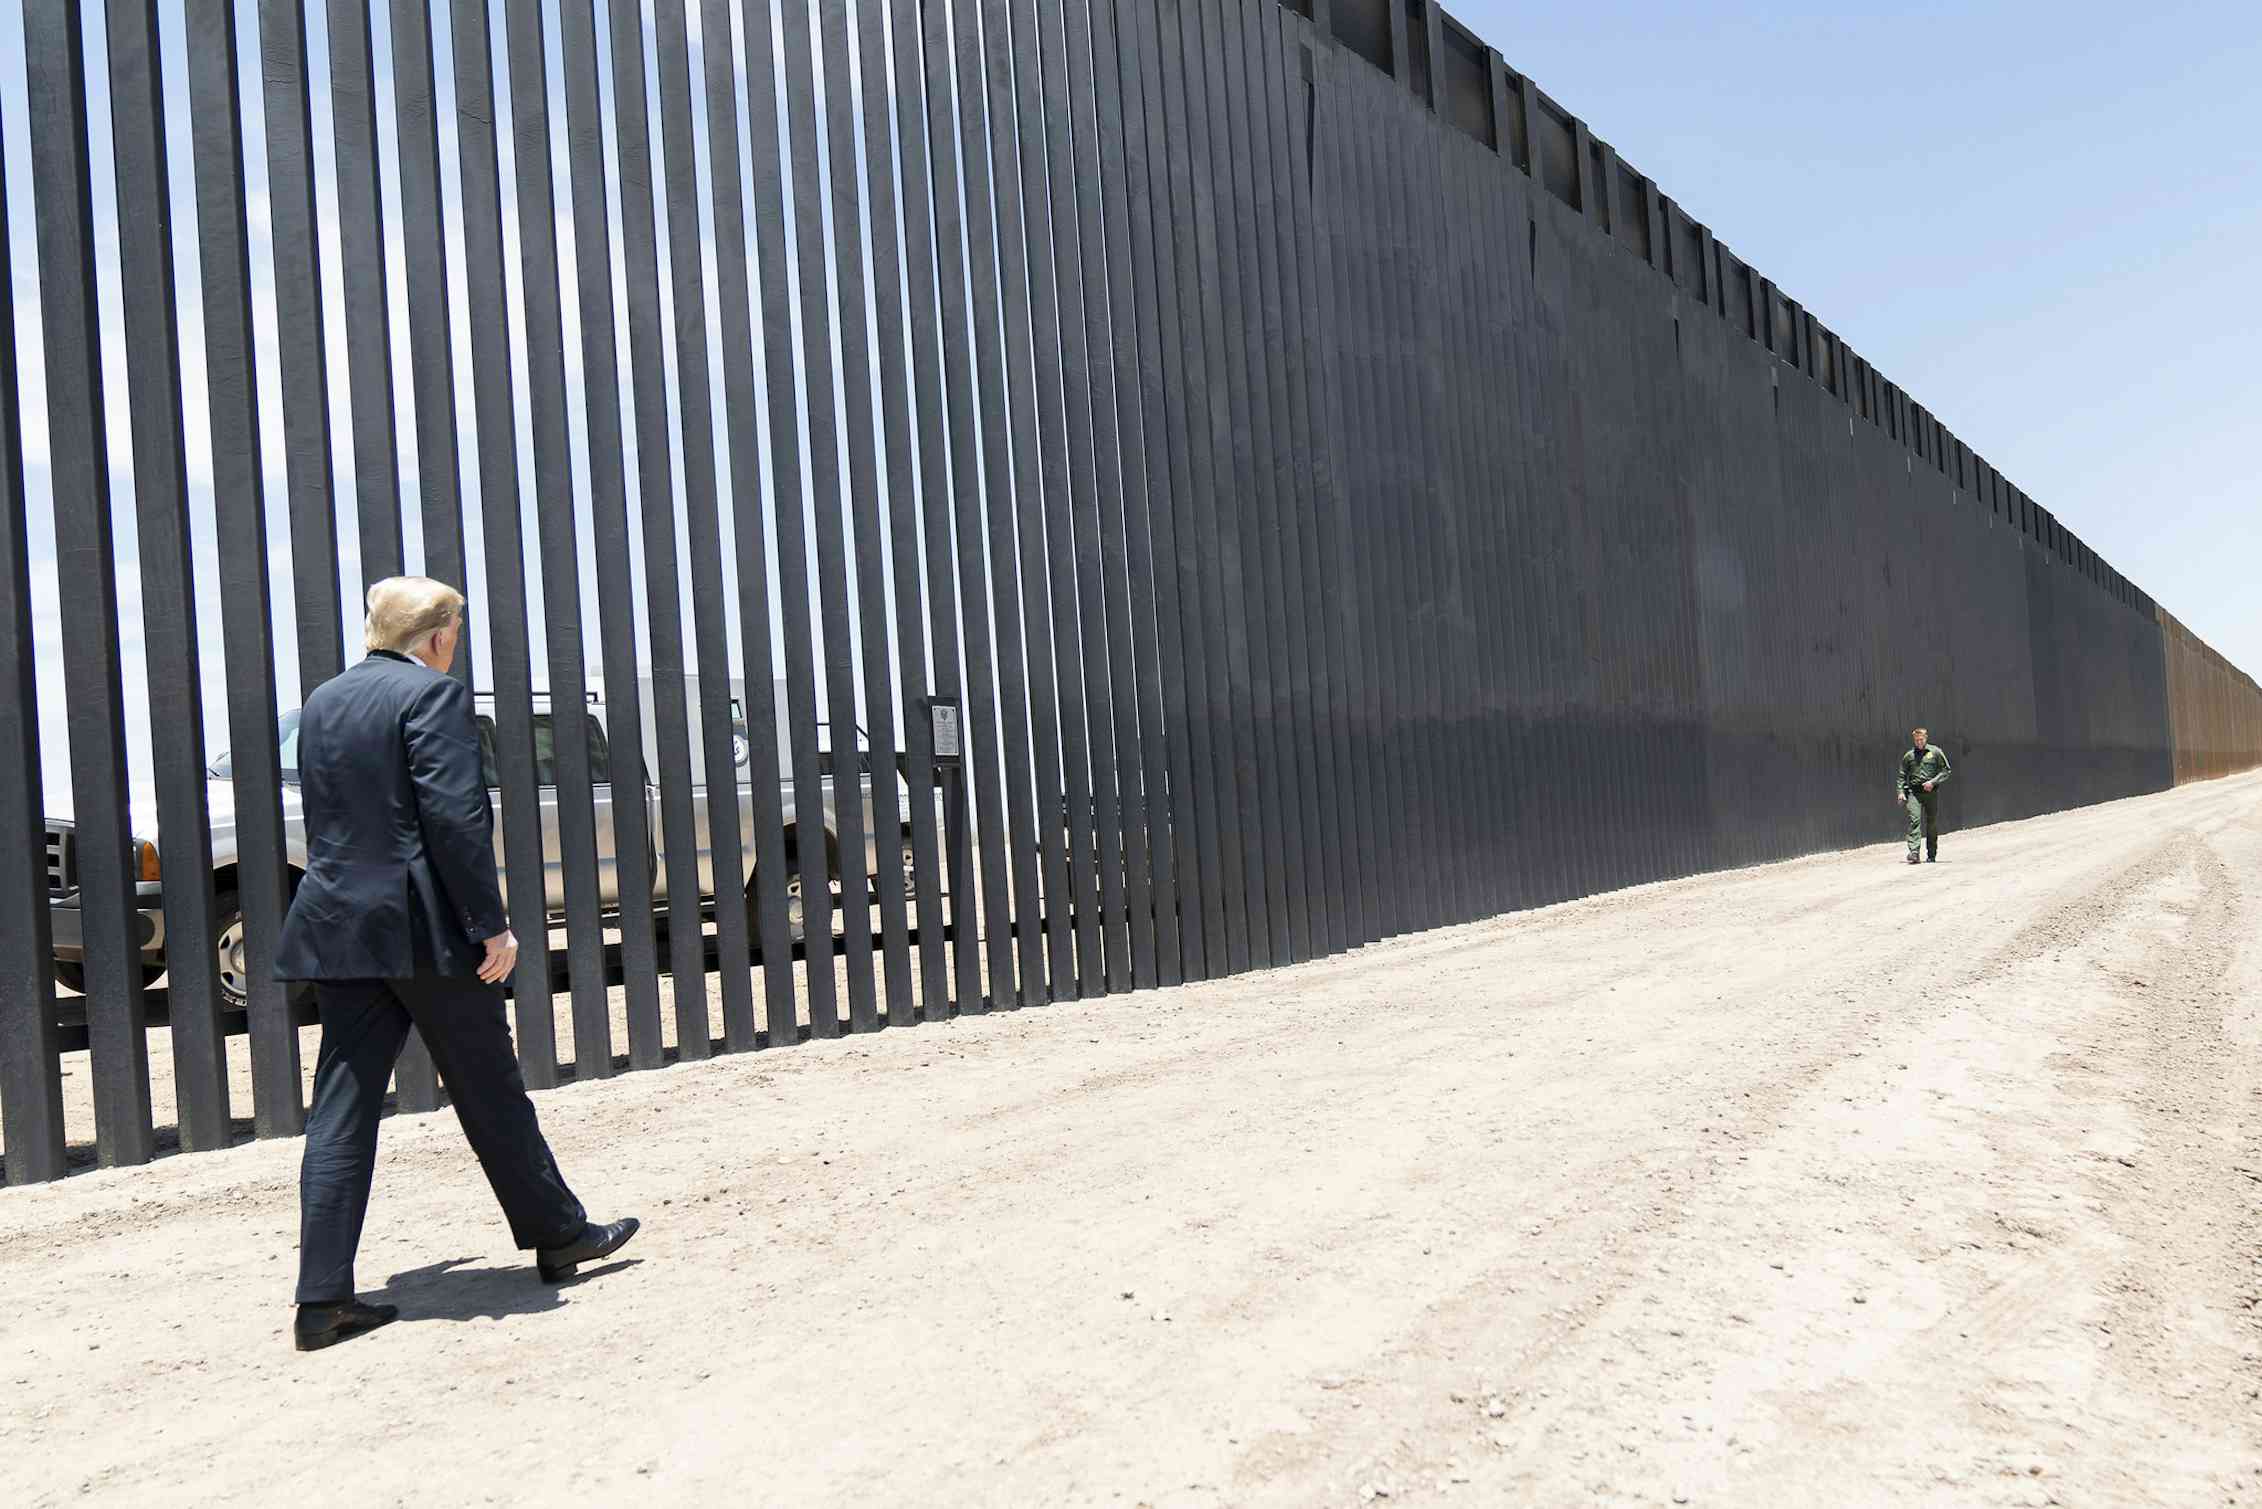 Man in suit walks along tall wall.